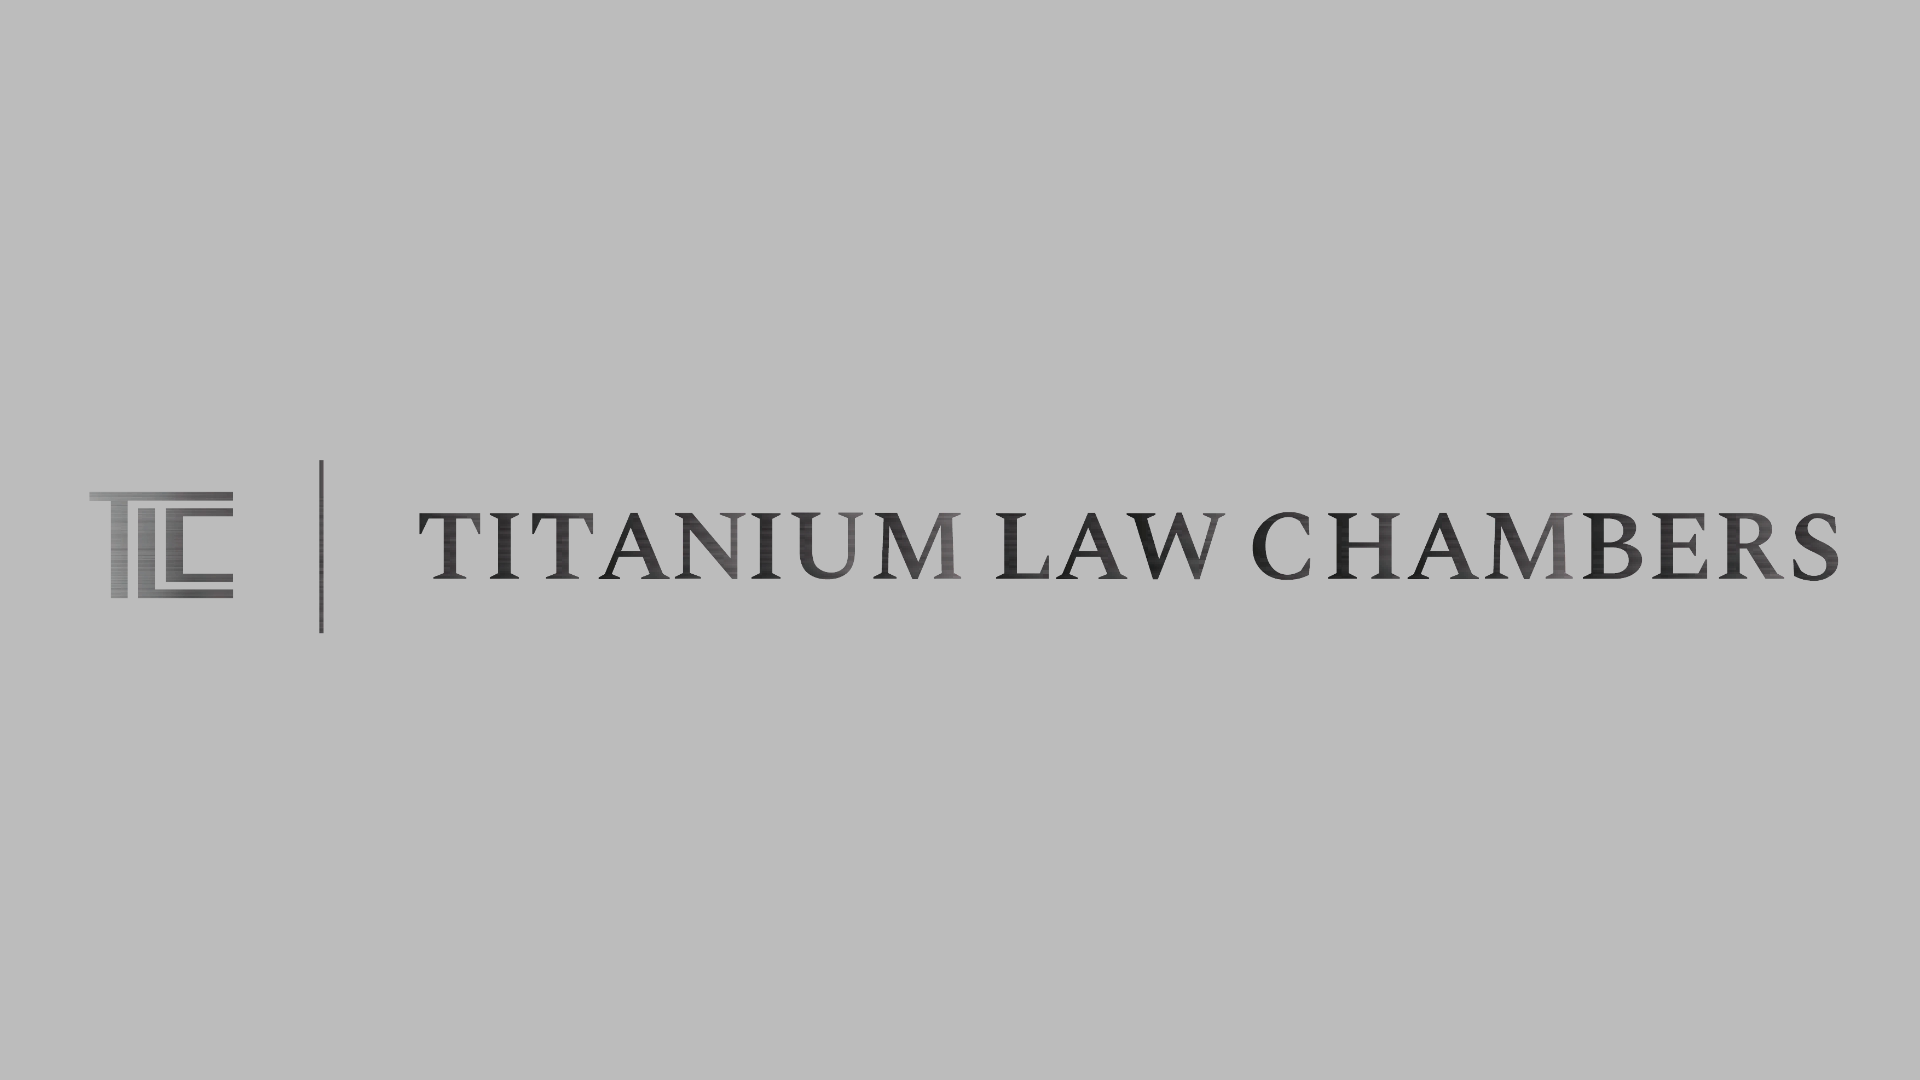 Titanium Law Chambers Llc company logo